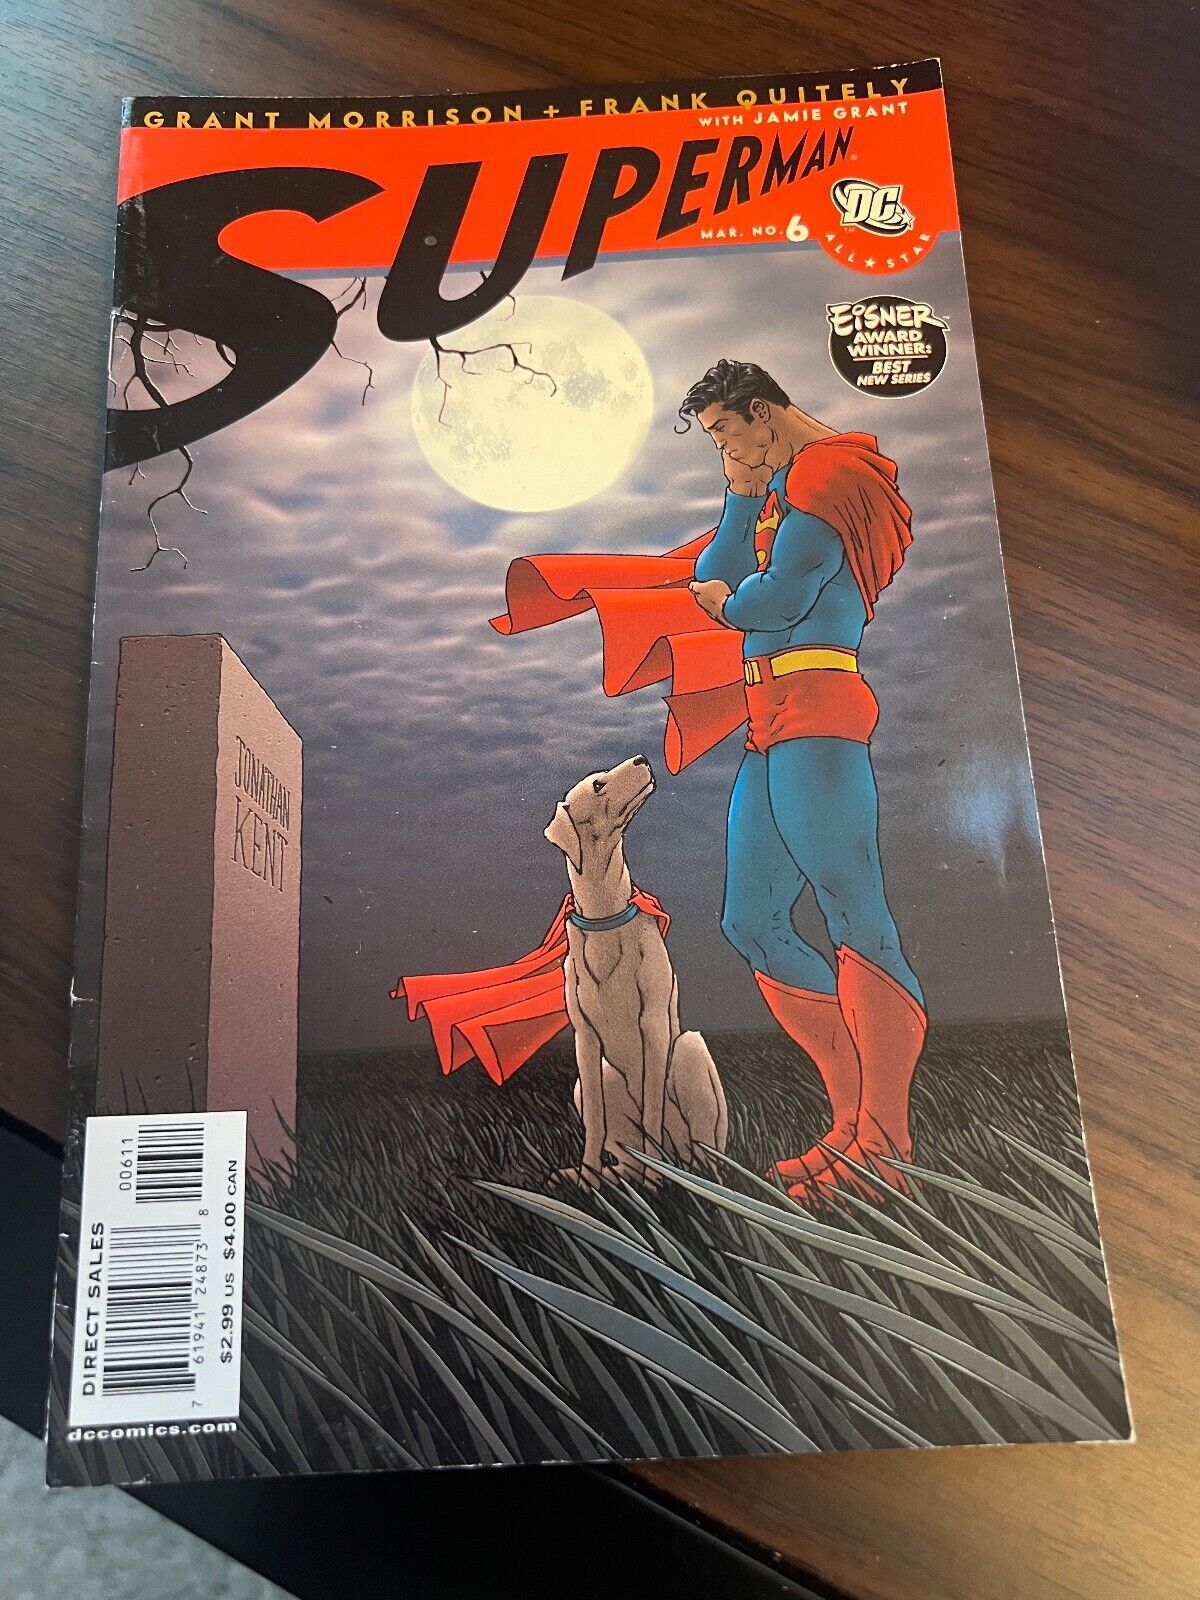 All-Star Superman #6 DC Comics Grant Morrison Frank Quitely Fine DCU 2007